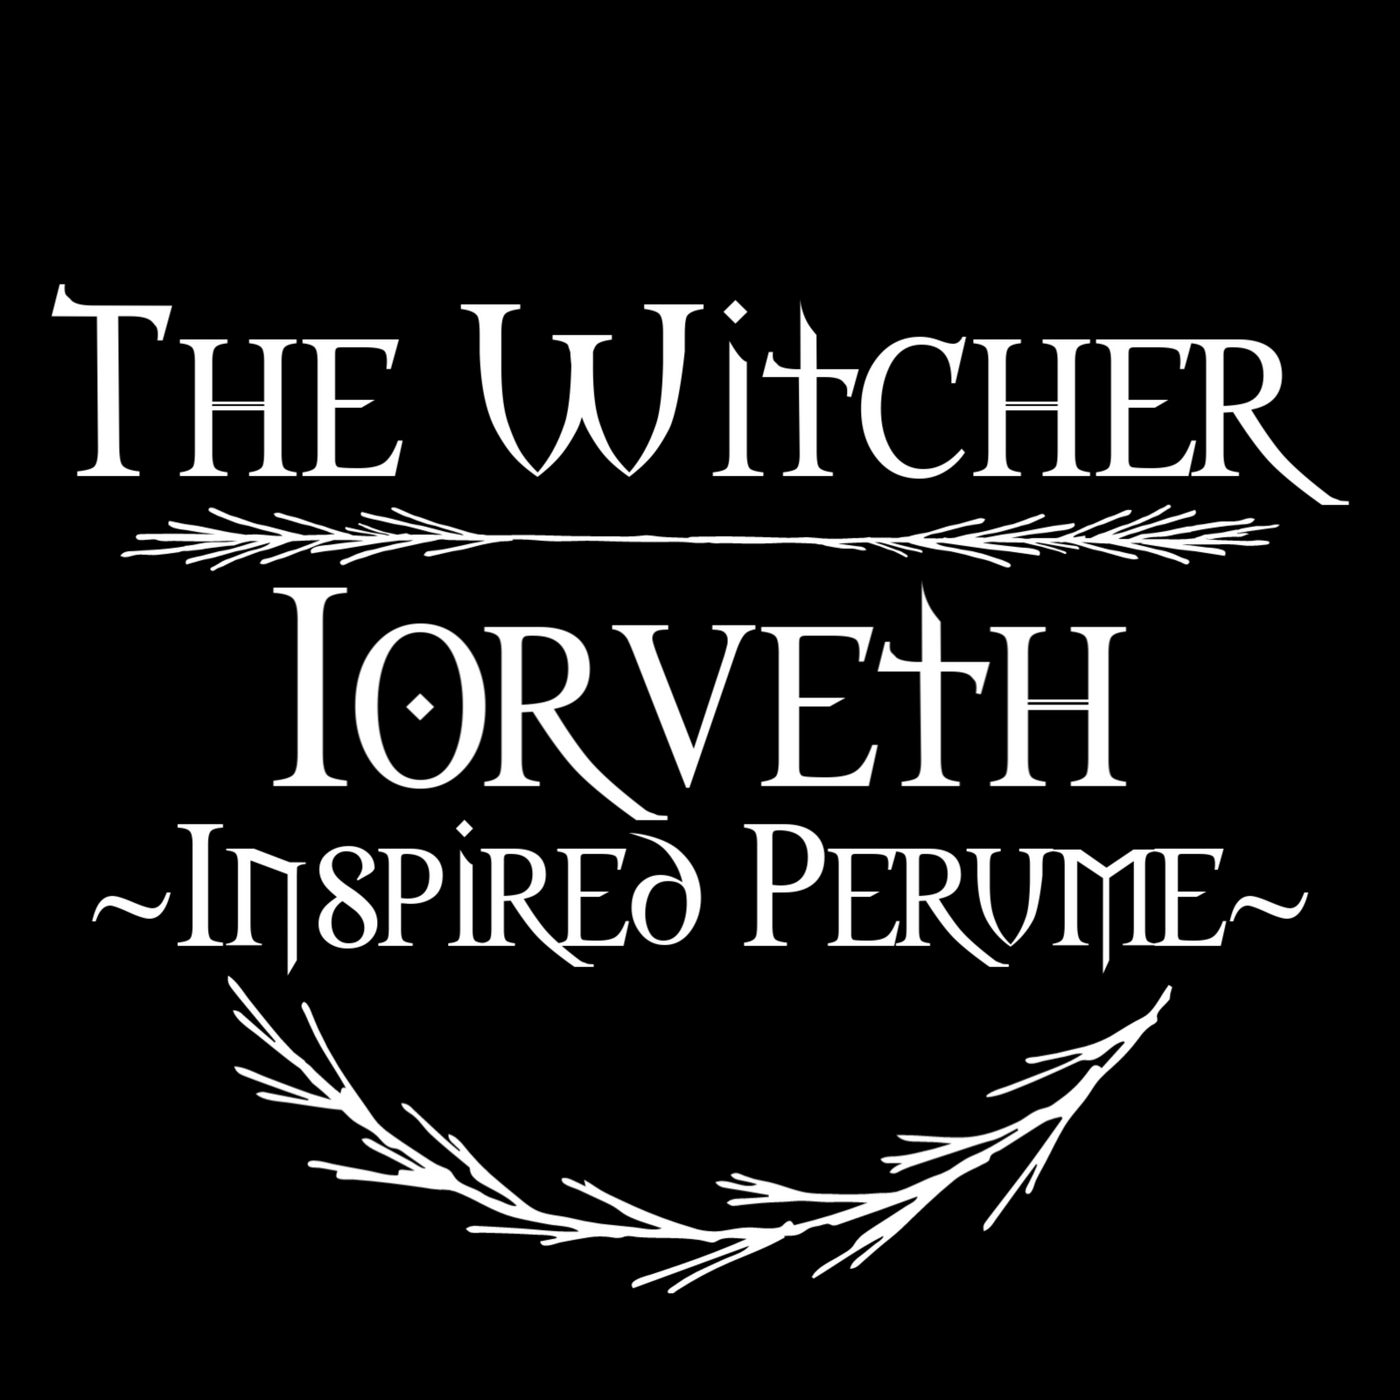 Iorveth inspired perfume (Vetiver, Cardamom, Dragons bood, Naga Champa, Frankincense, Myrrh, Clove, Leather, Chocolate)